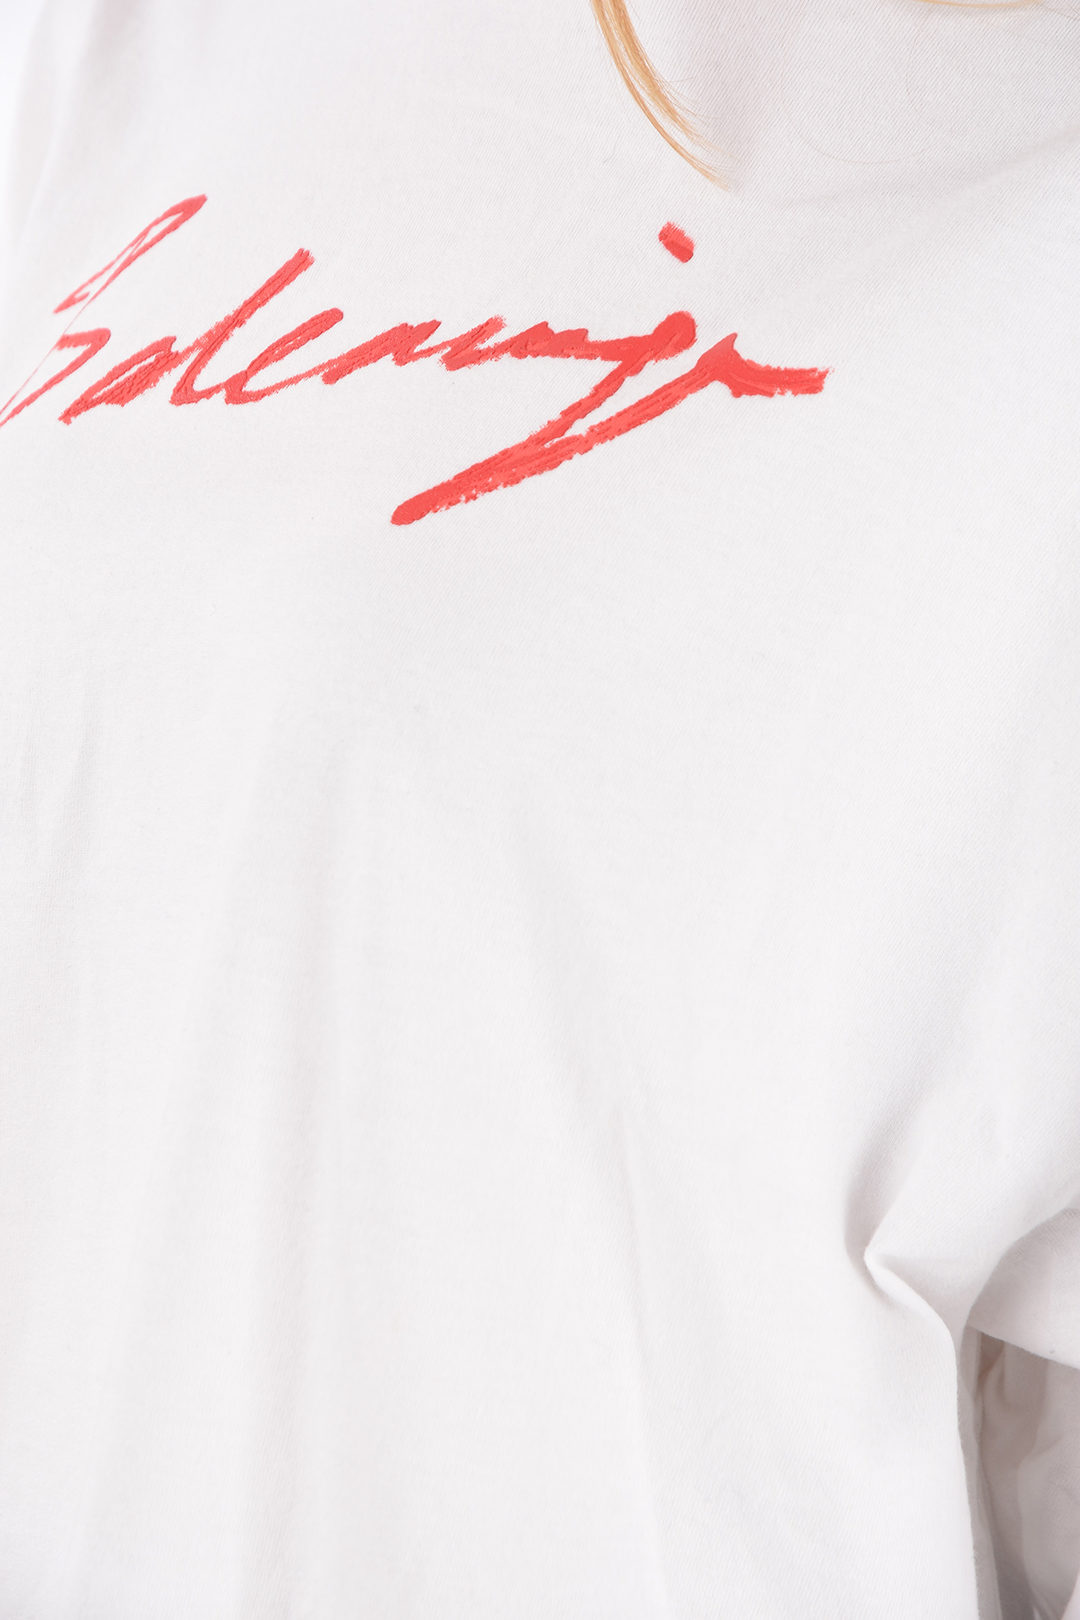 BALENCIAGA Donna  Tshirt Balenciaga x PlayStation Bianco  BALENCIAGA  661705 TKVF39040  Leam Luxury Shopping Online